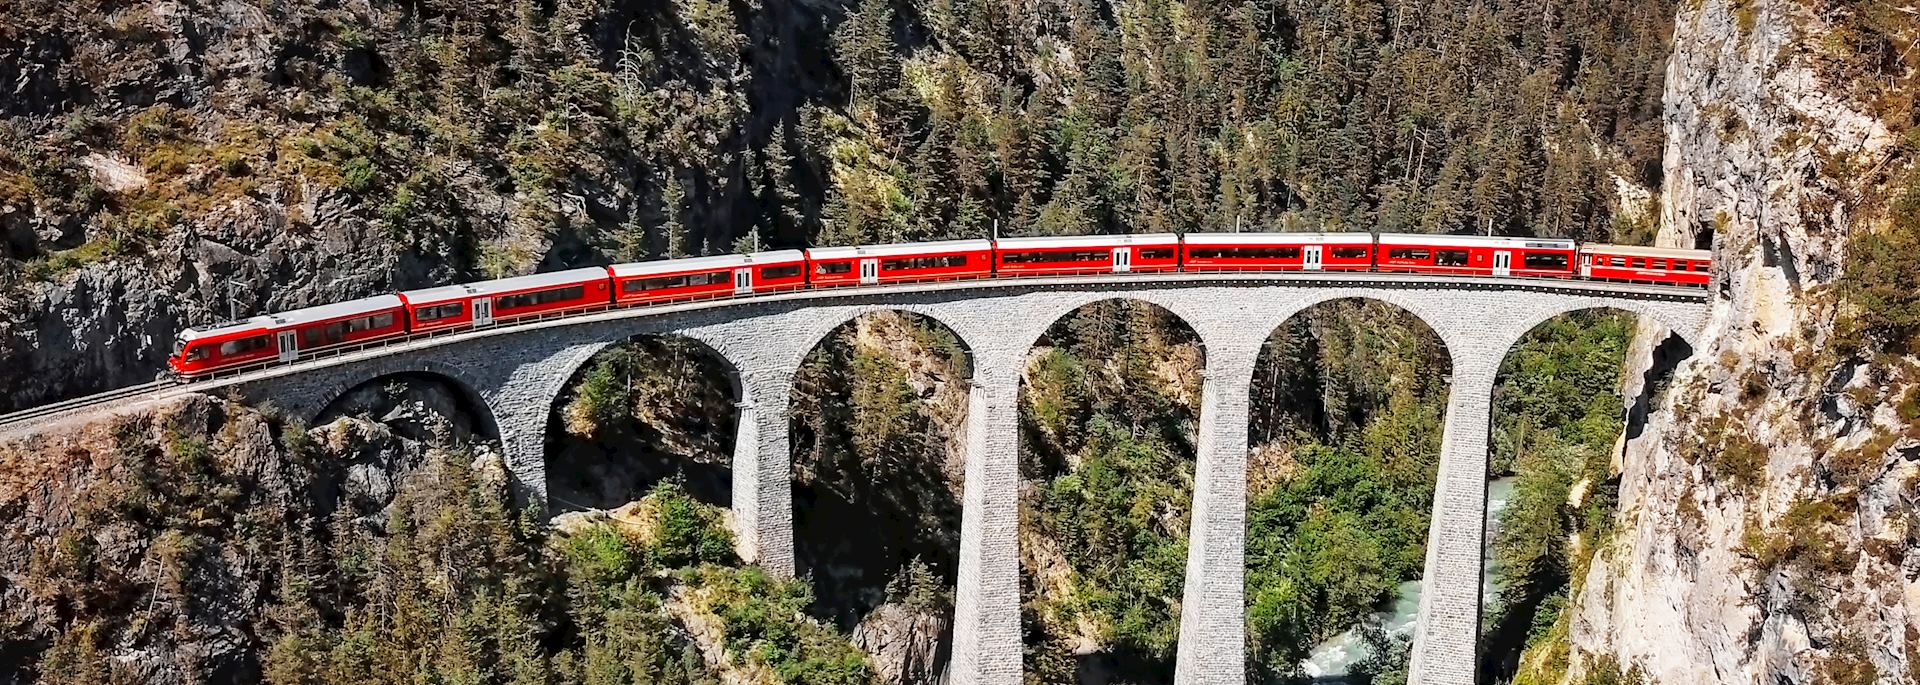 Glacier Express passing over the Landwasser Viaduct, Switzerland